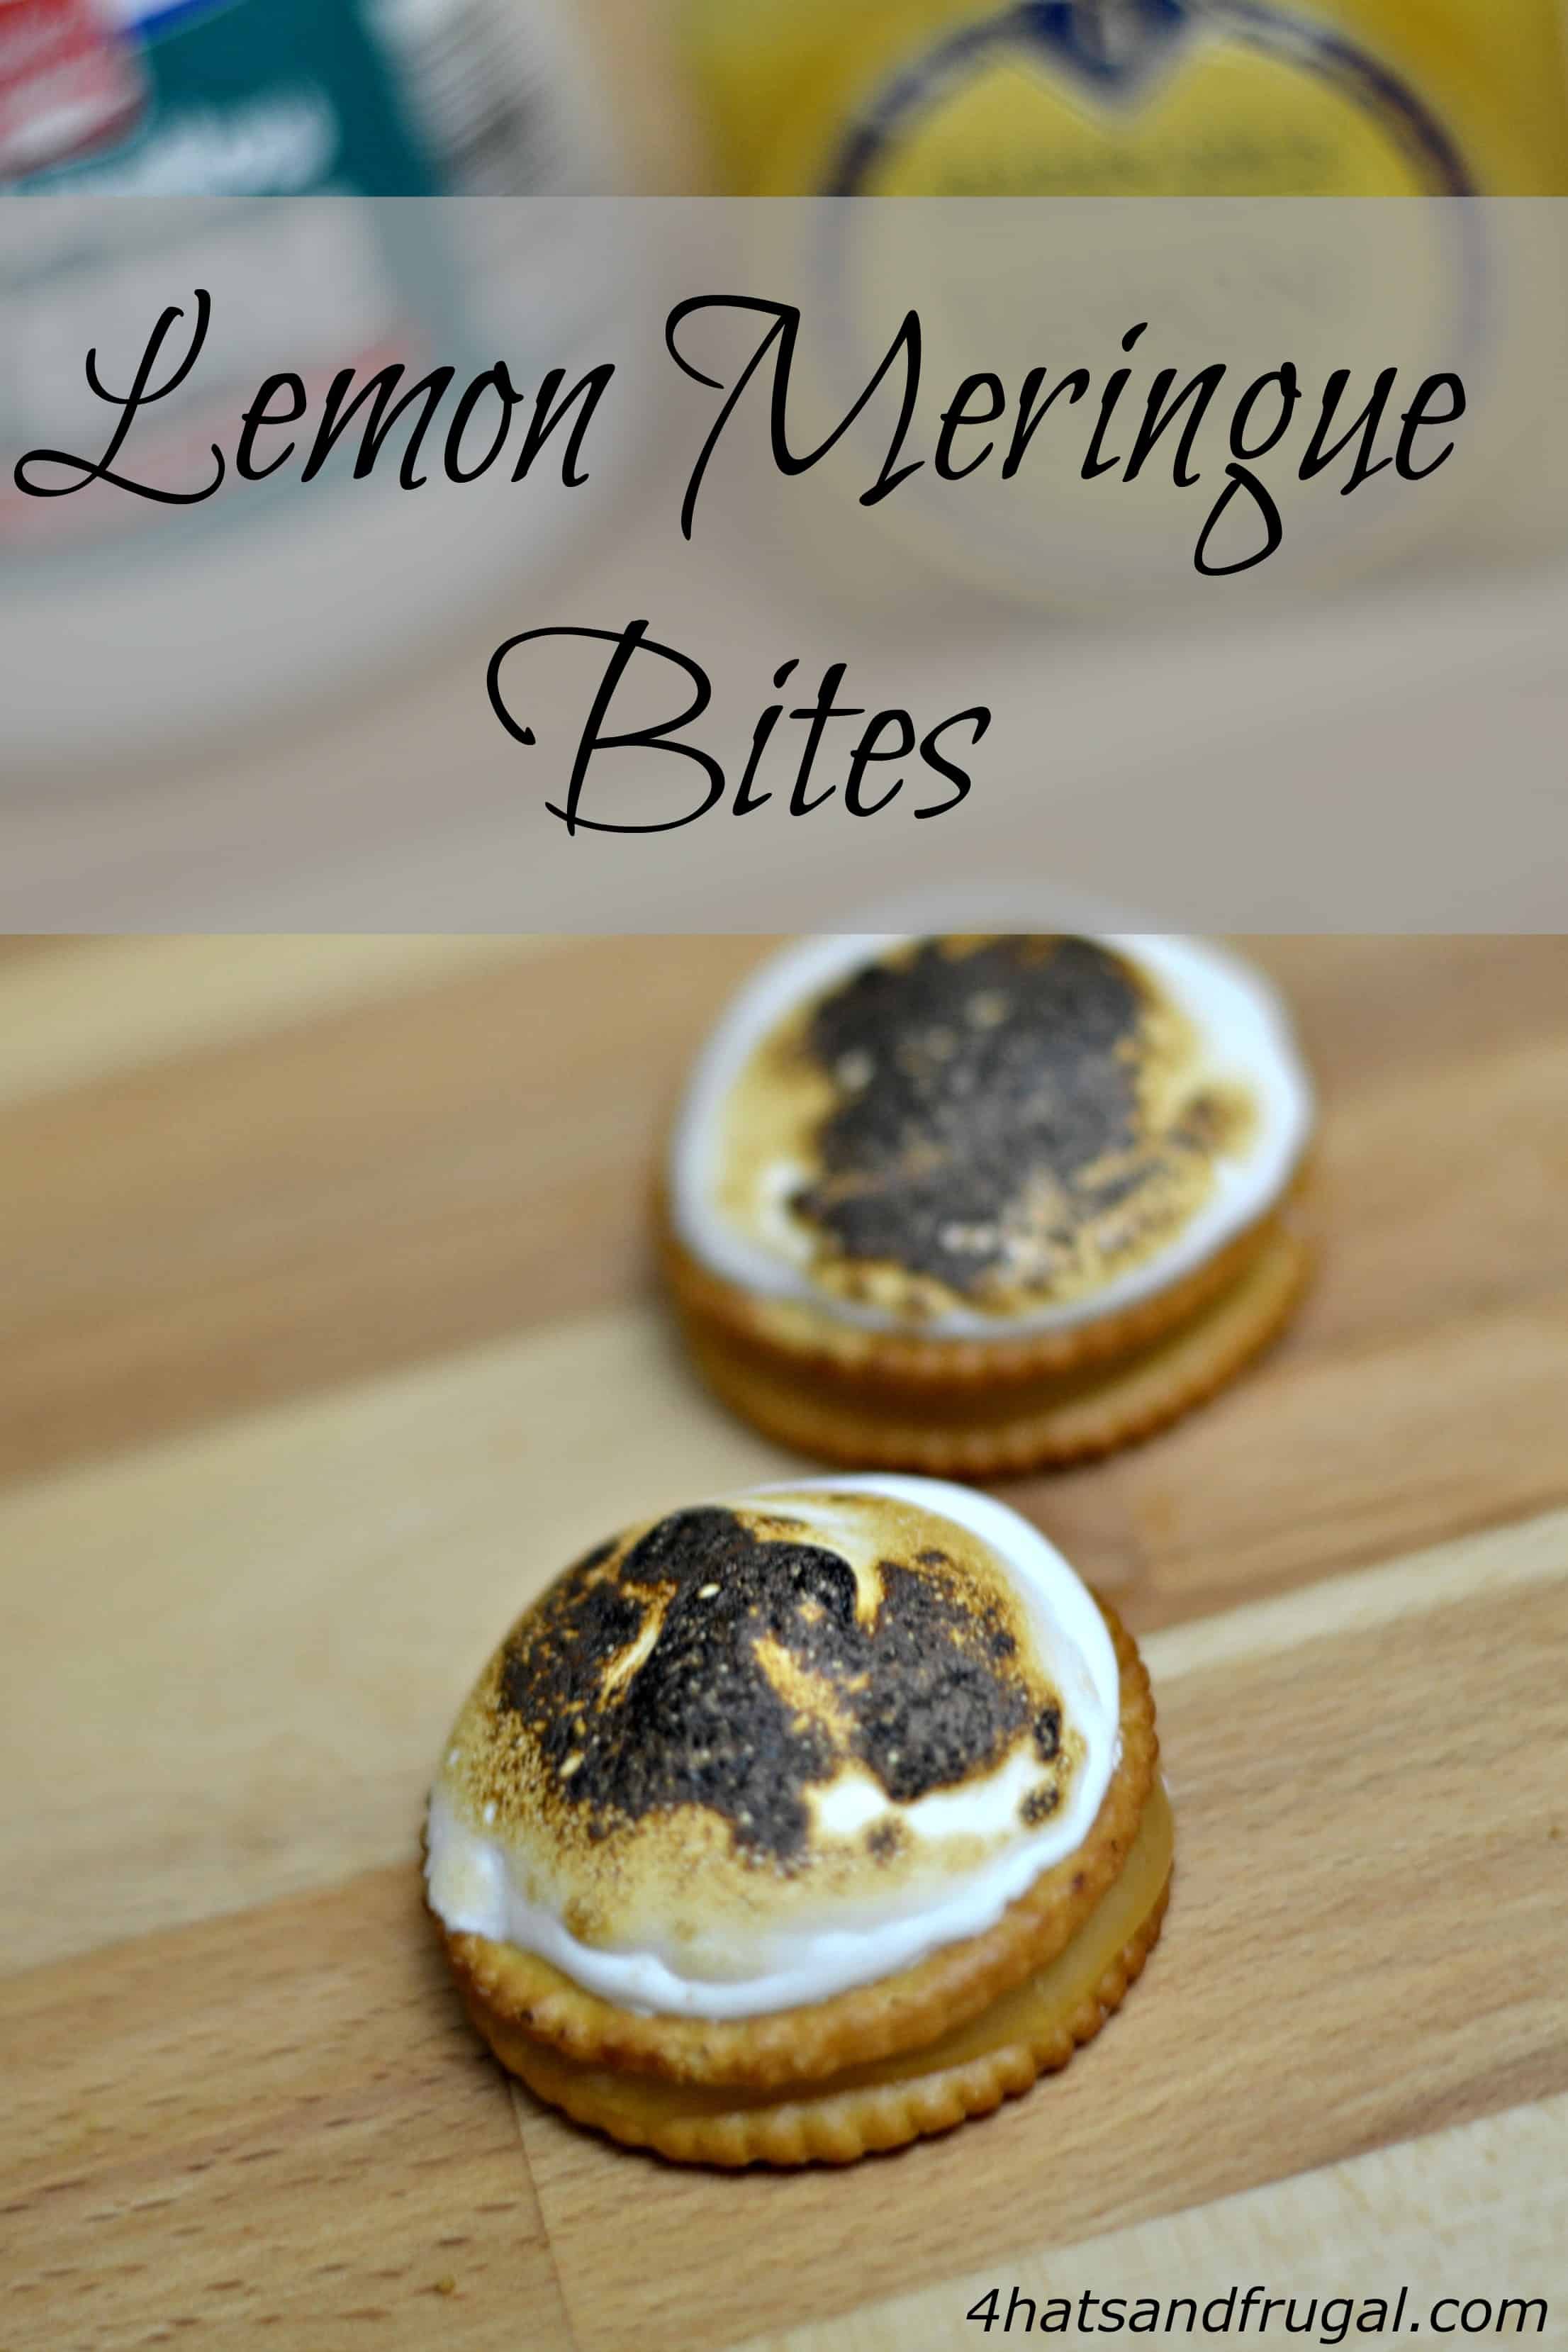 This quick snack is a delicious spin on the original lemon meringue pie dessert.